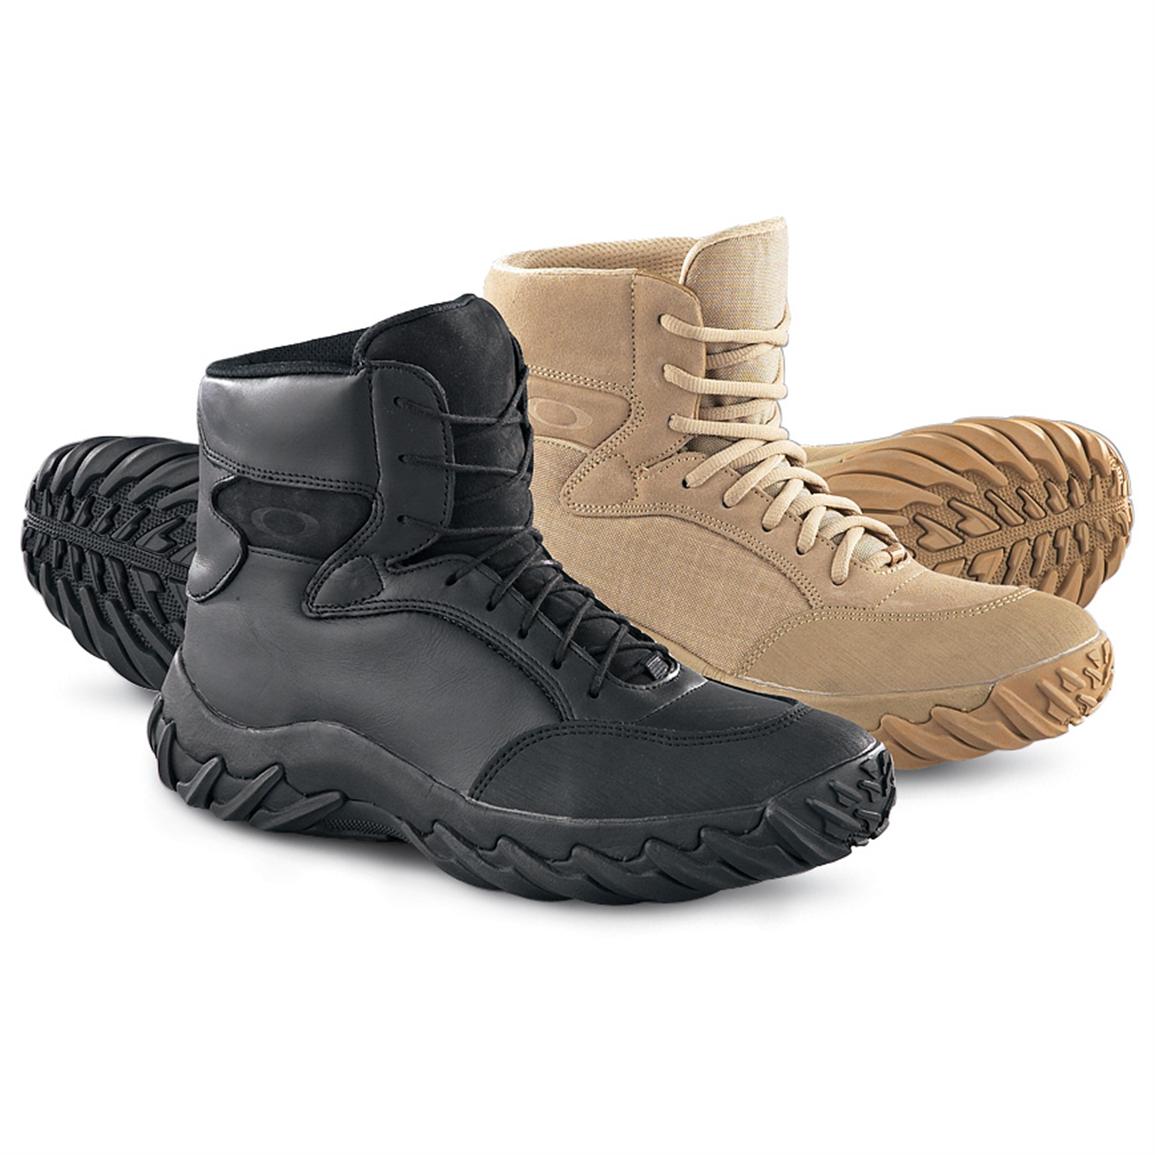 Buy > mens oakley boots > in stock